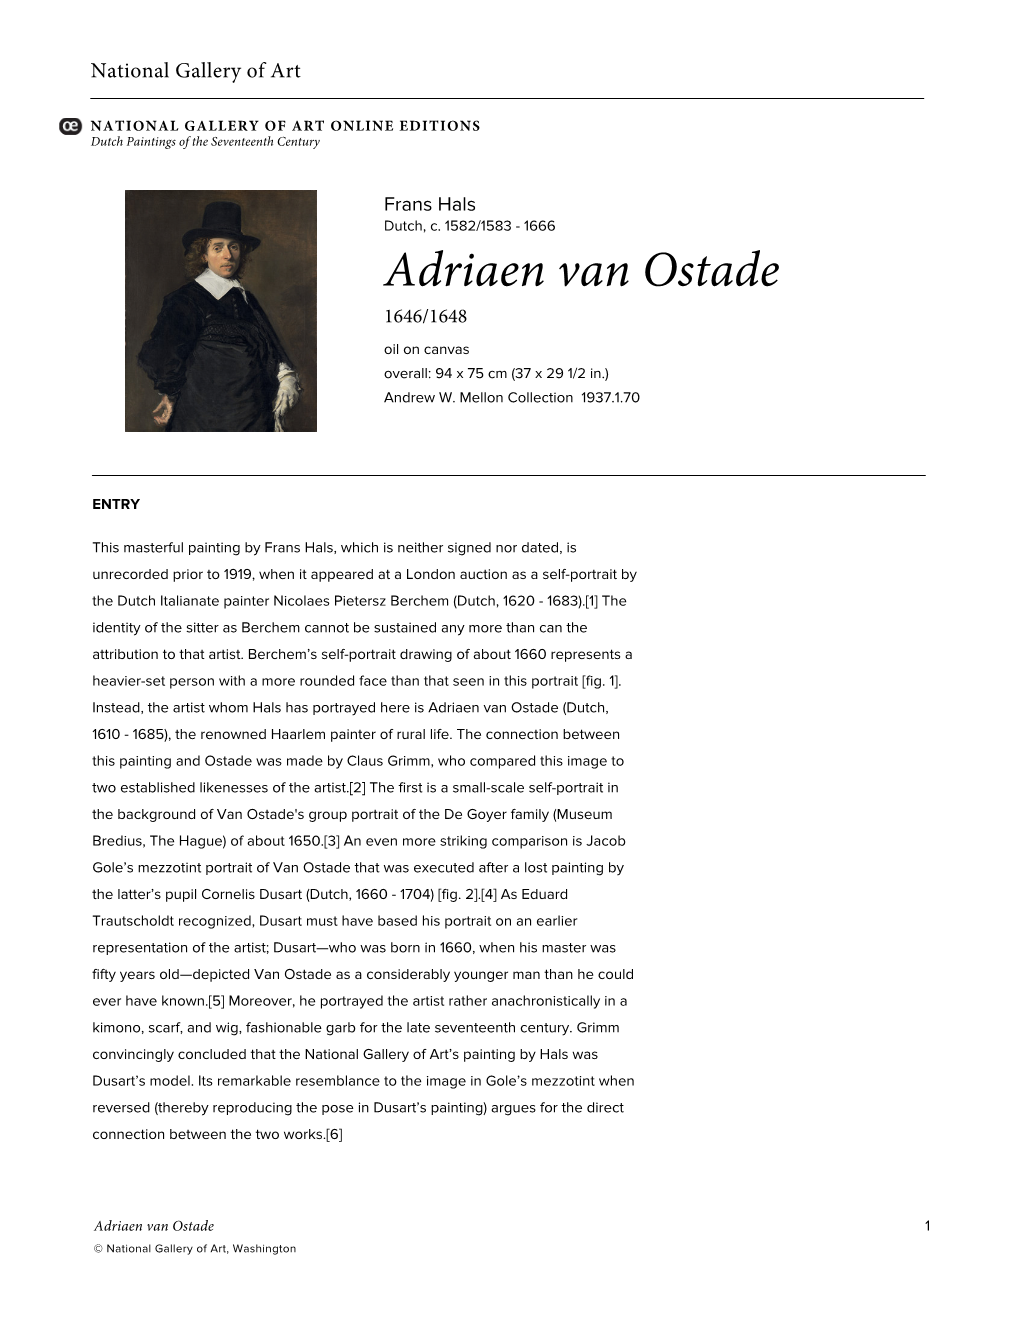 Adriaen Van Ostade 1646/1648 Oil on Canvas Overall: 94 X 75 Cm (37 X 29 1/2 In.) Andrew W